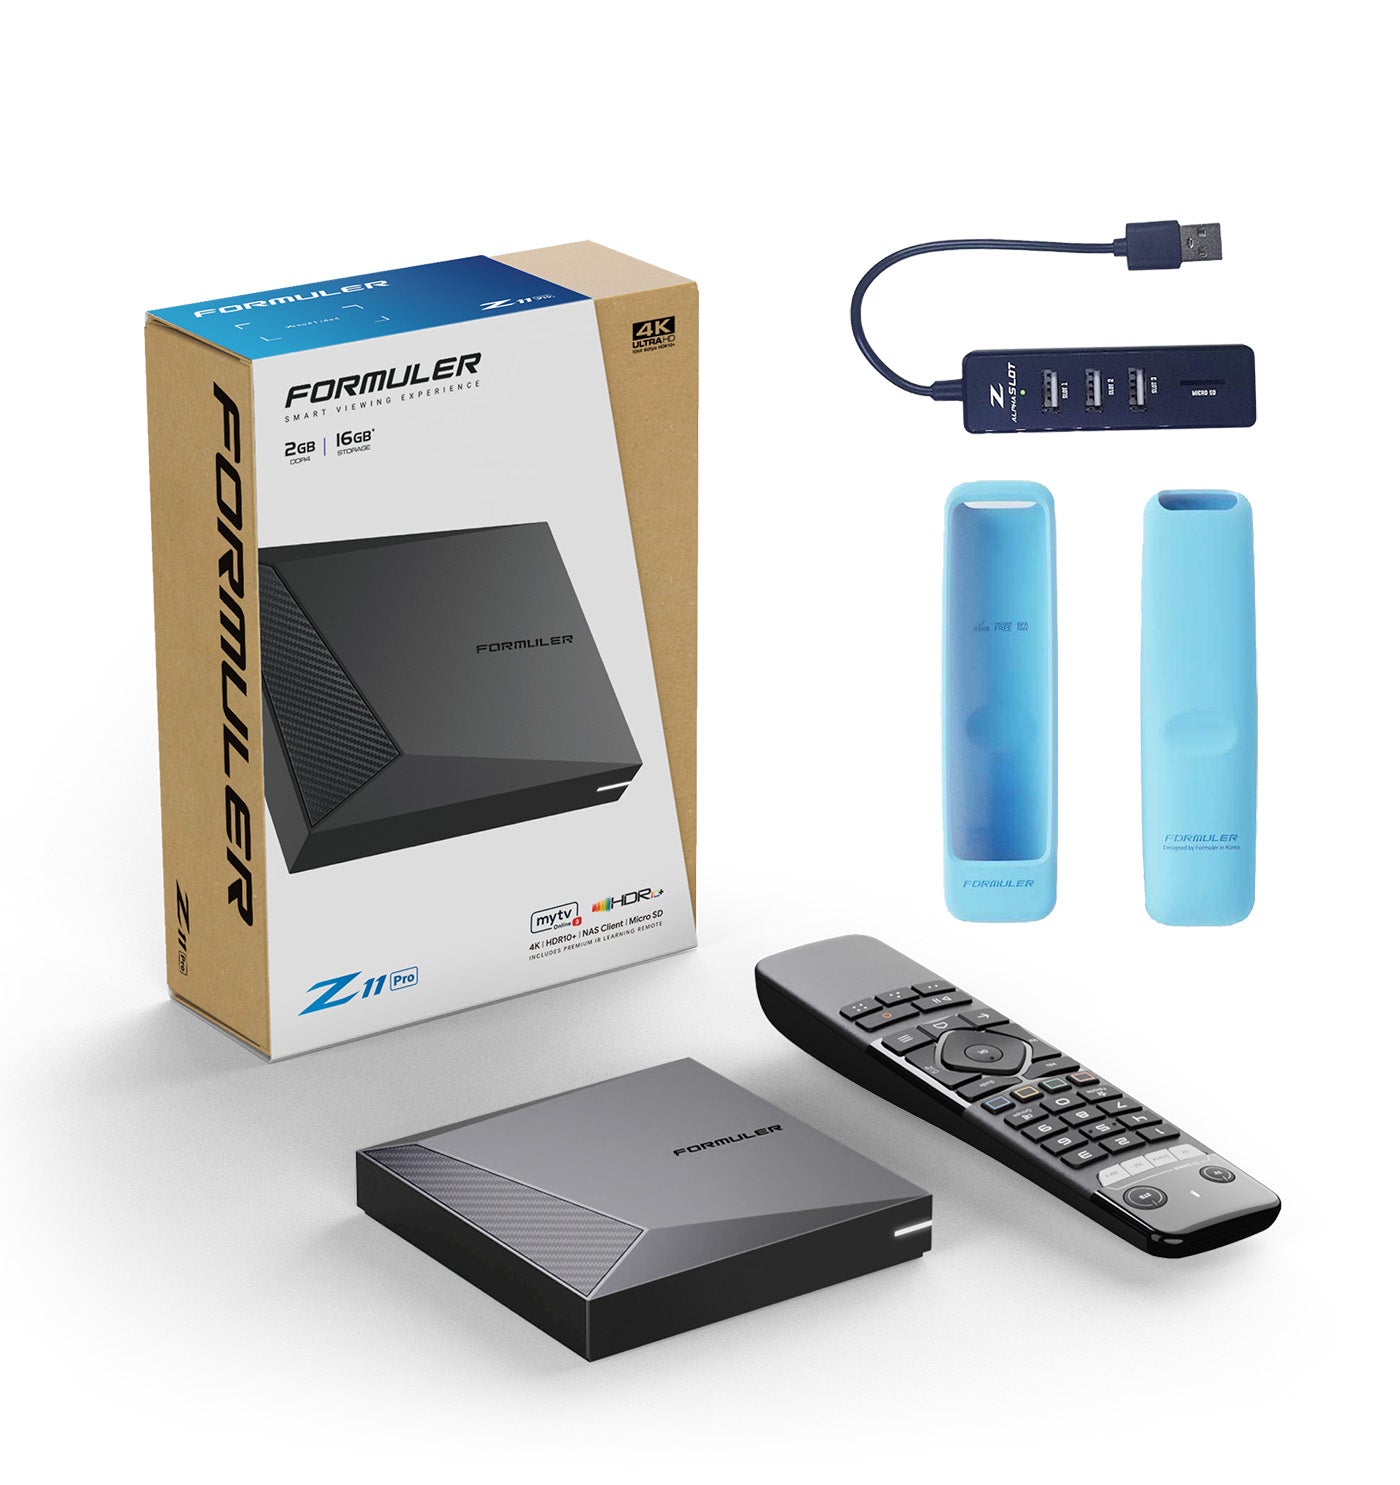 Formuler Z11 Pro + FREE ACCESSORY: 1x Blue Remote Cover + 1x USB Hub